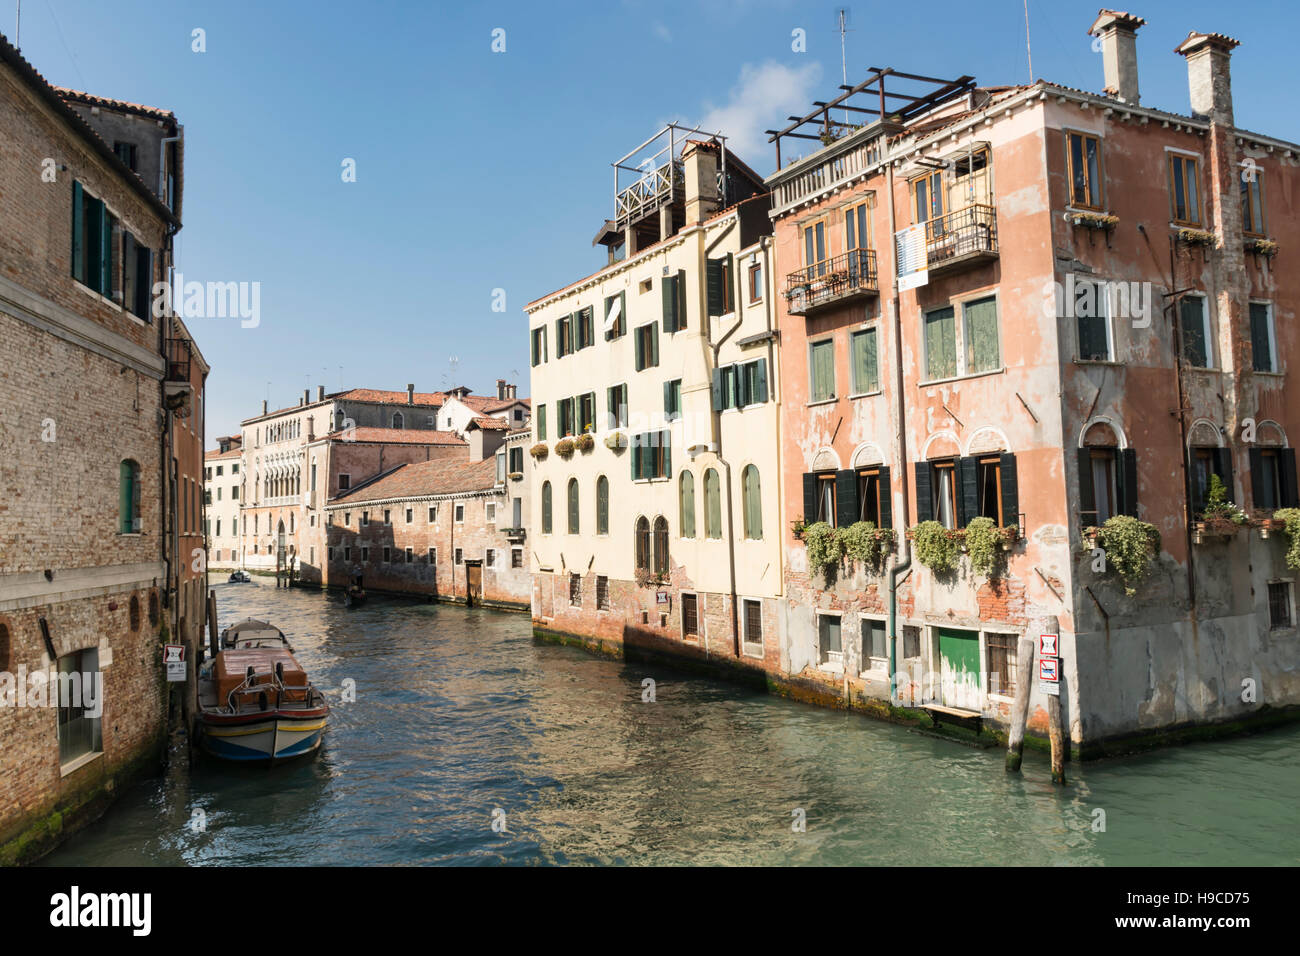 Canal with docked boats, Venice, Italy, Europe Stock Photo